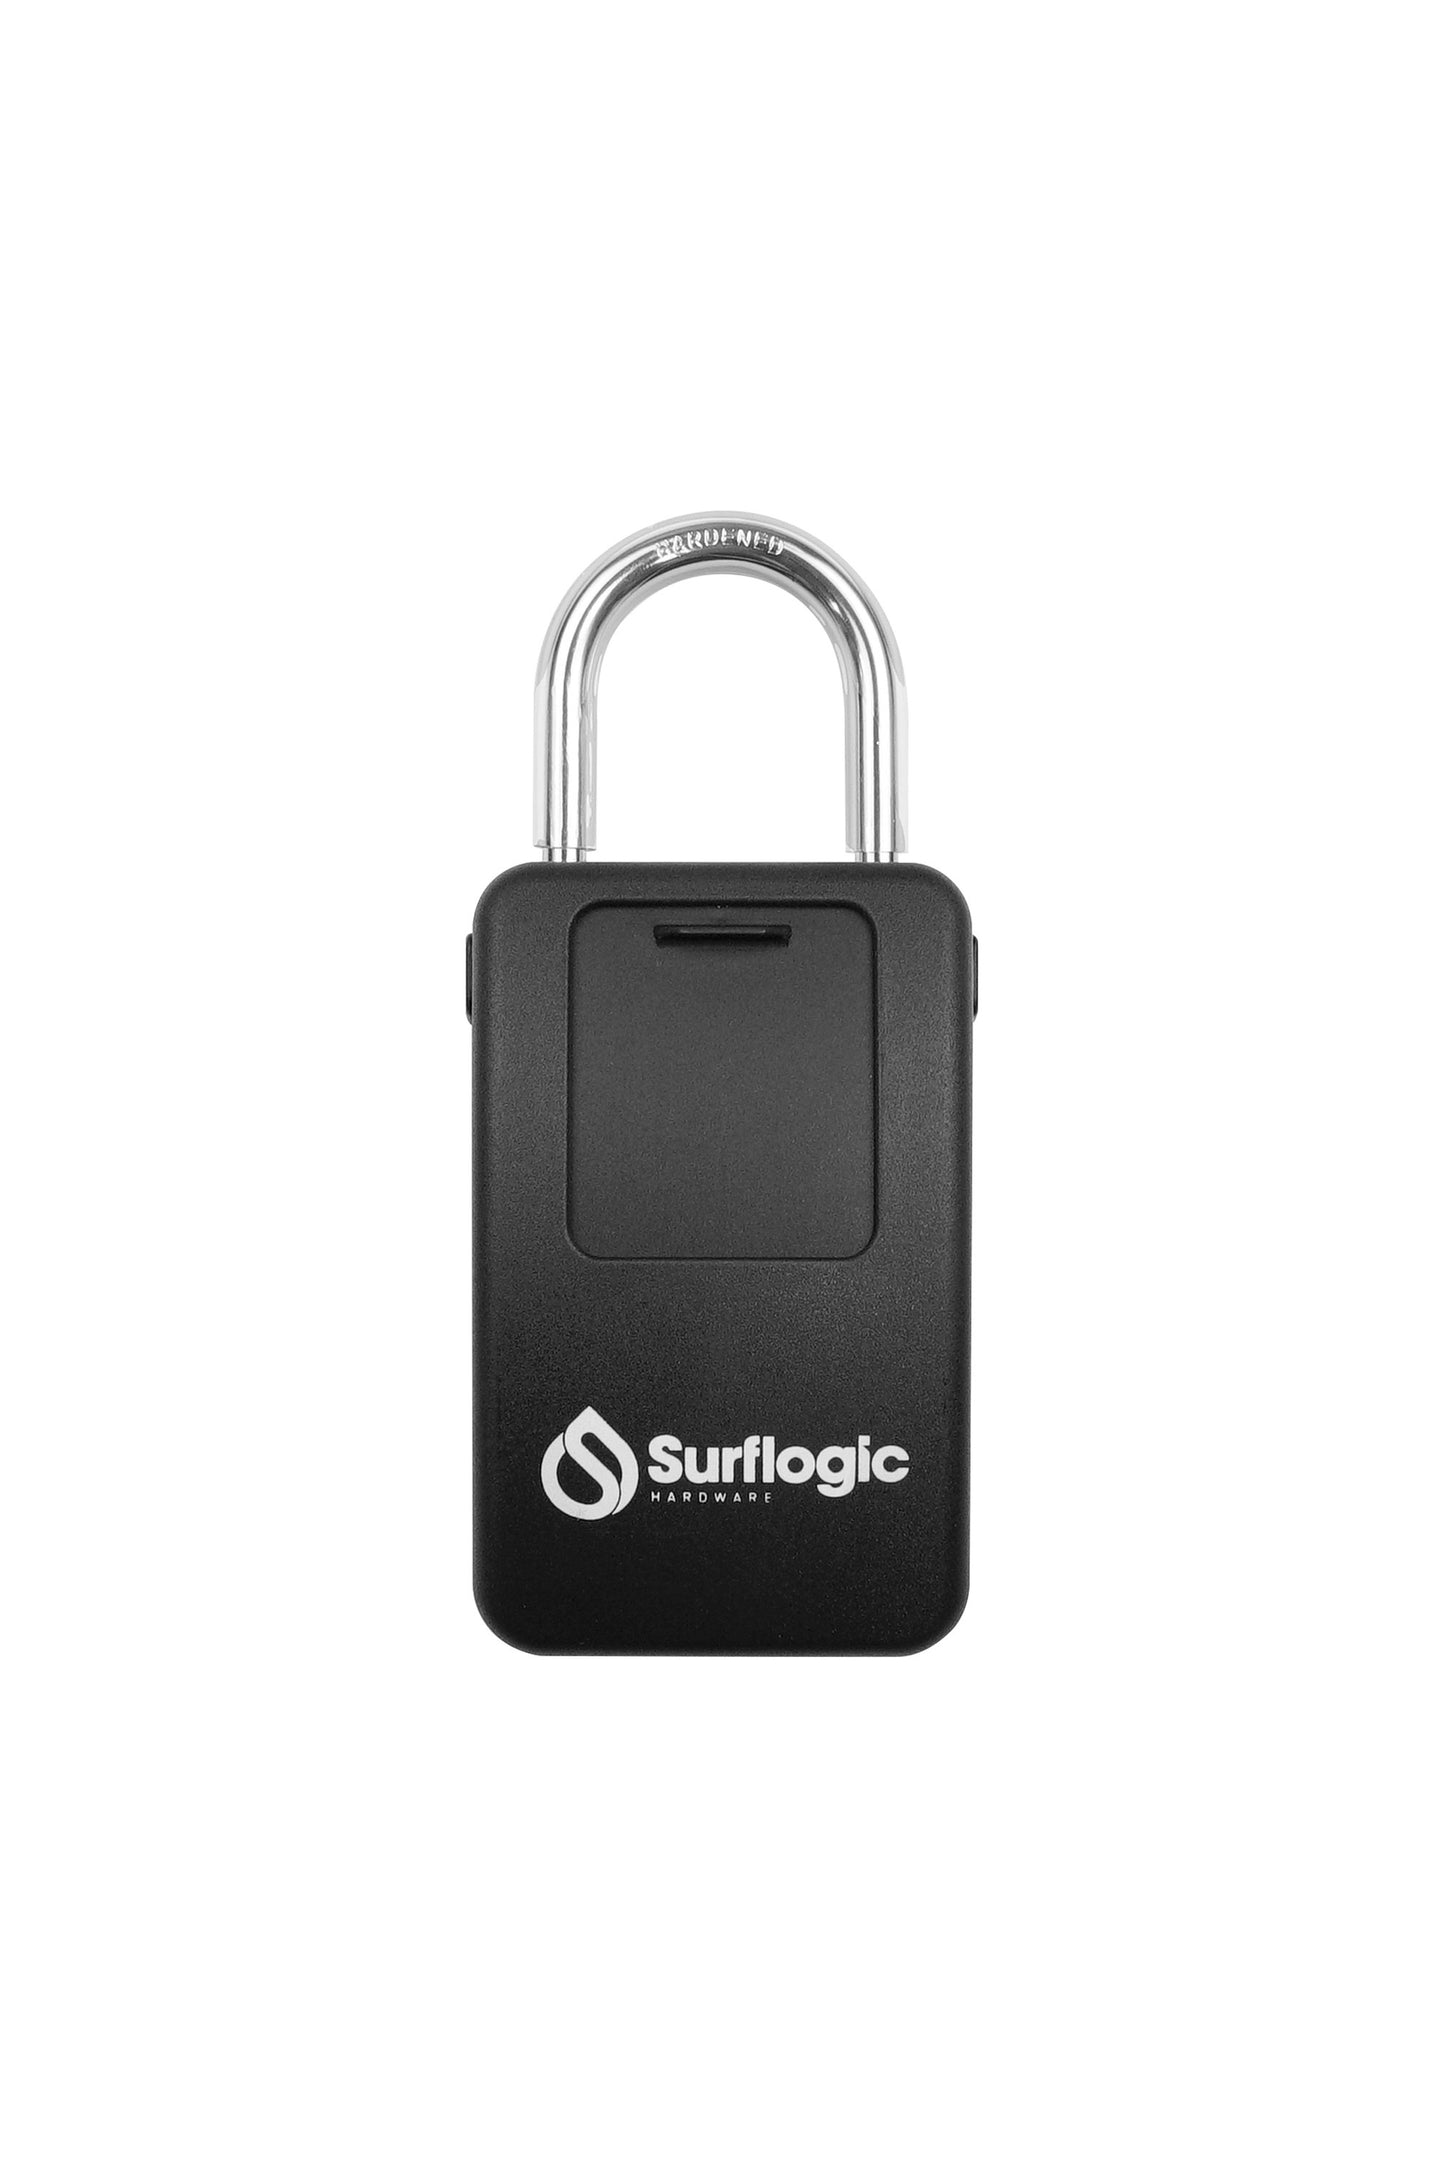        Pukas-Surf-Shop-surflogic-key-lock